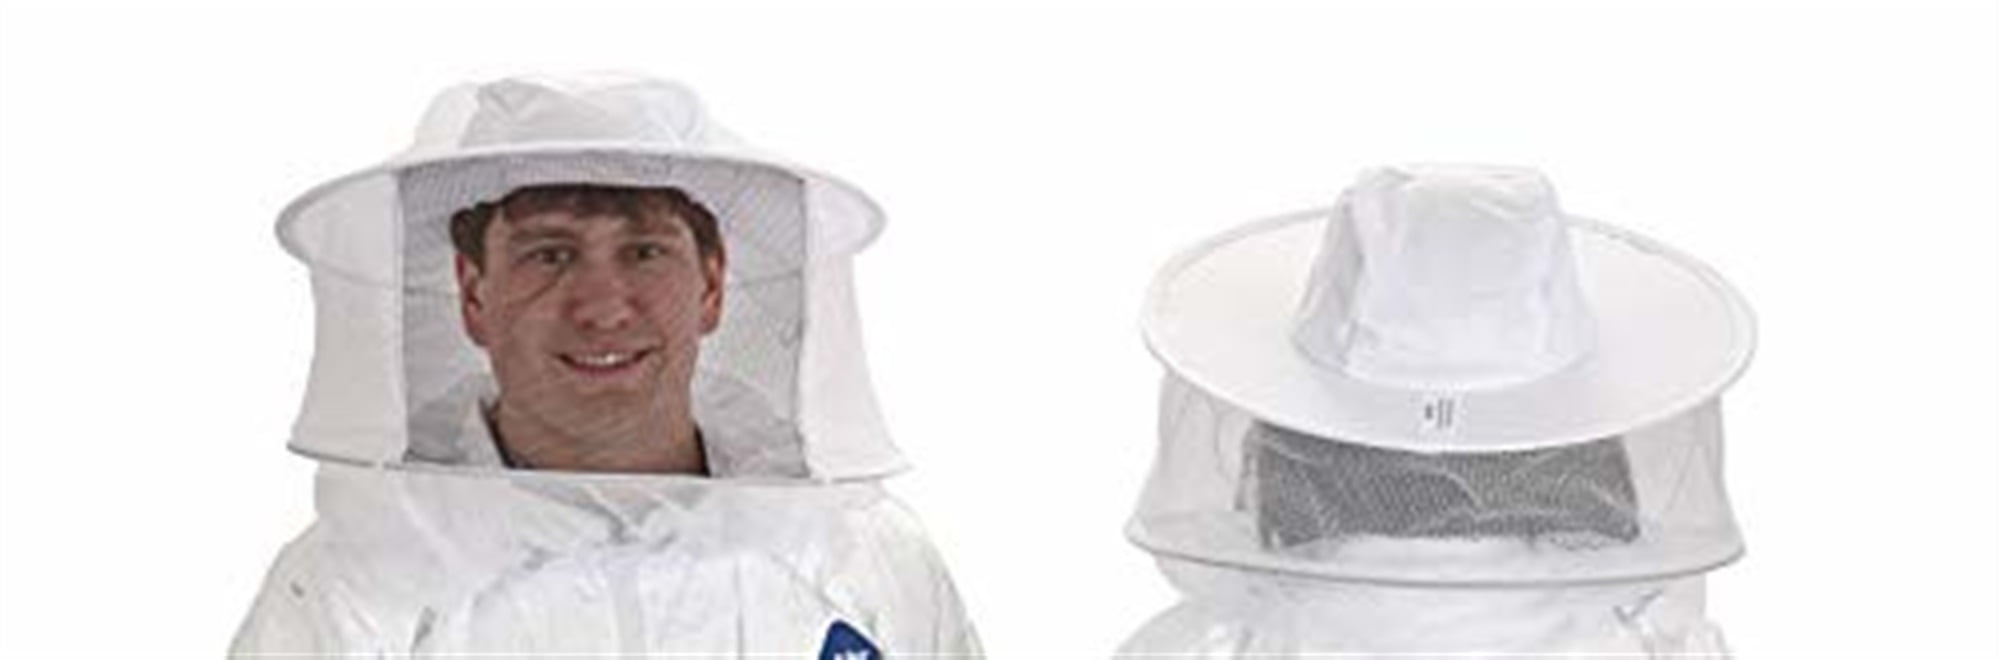 BEE PROOF Brand Beekeeper Veil White hat Round top w/ Elastic Under arm Straps 